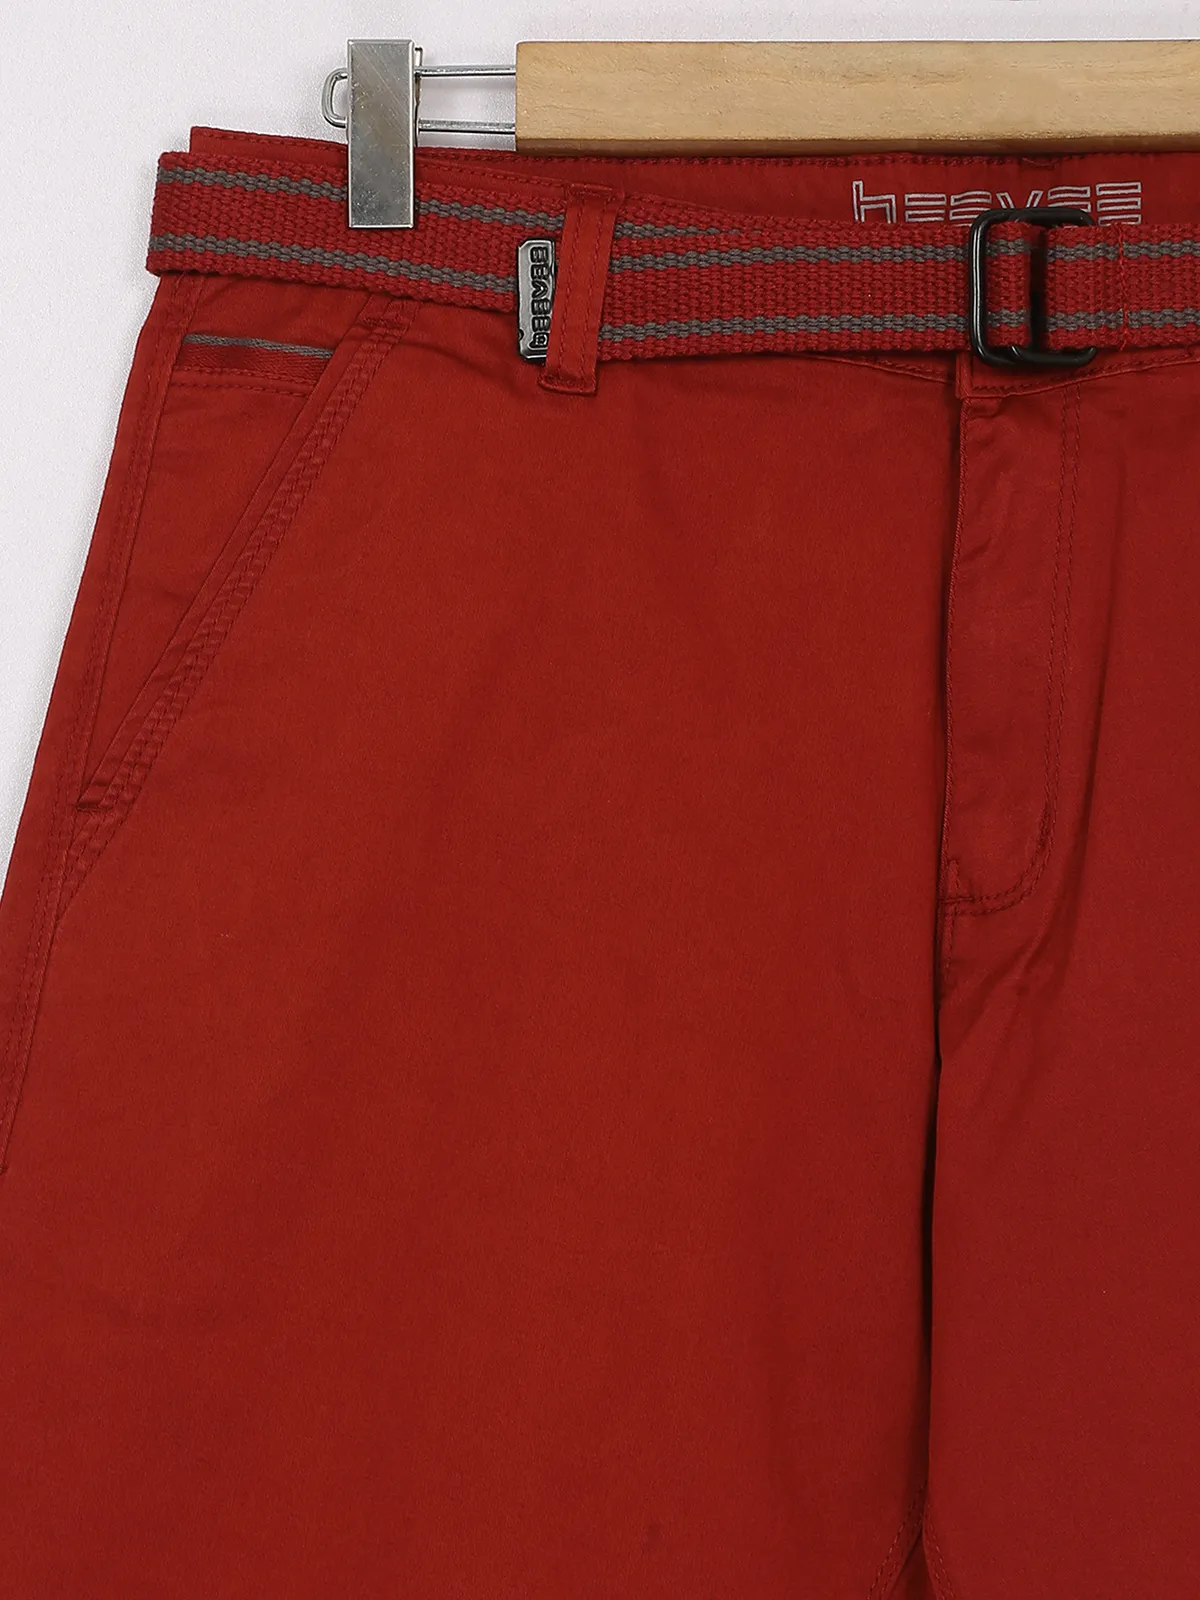 Beevee maroon cotton shorts